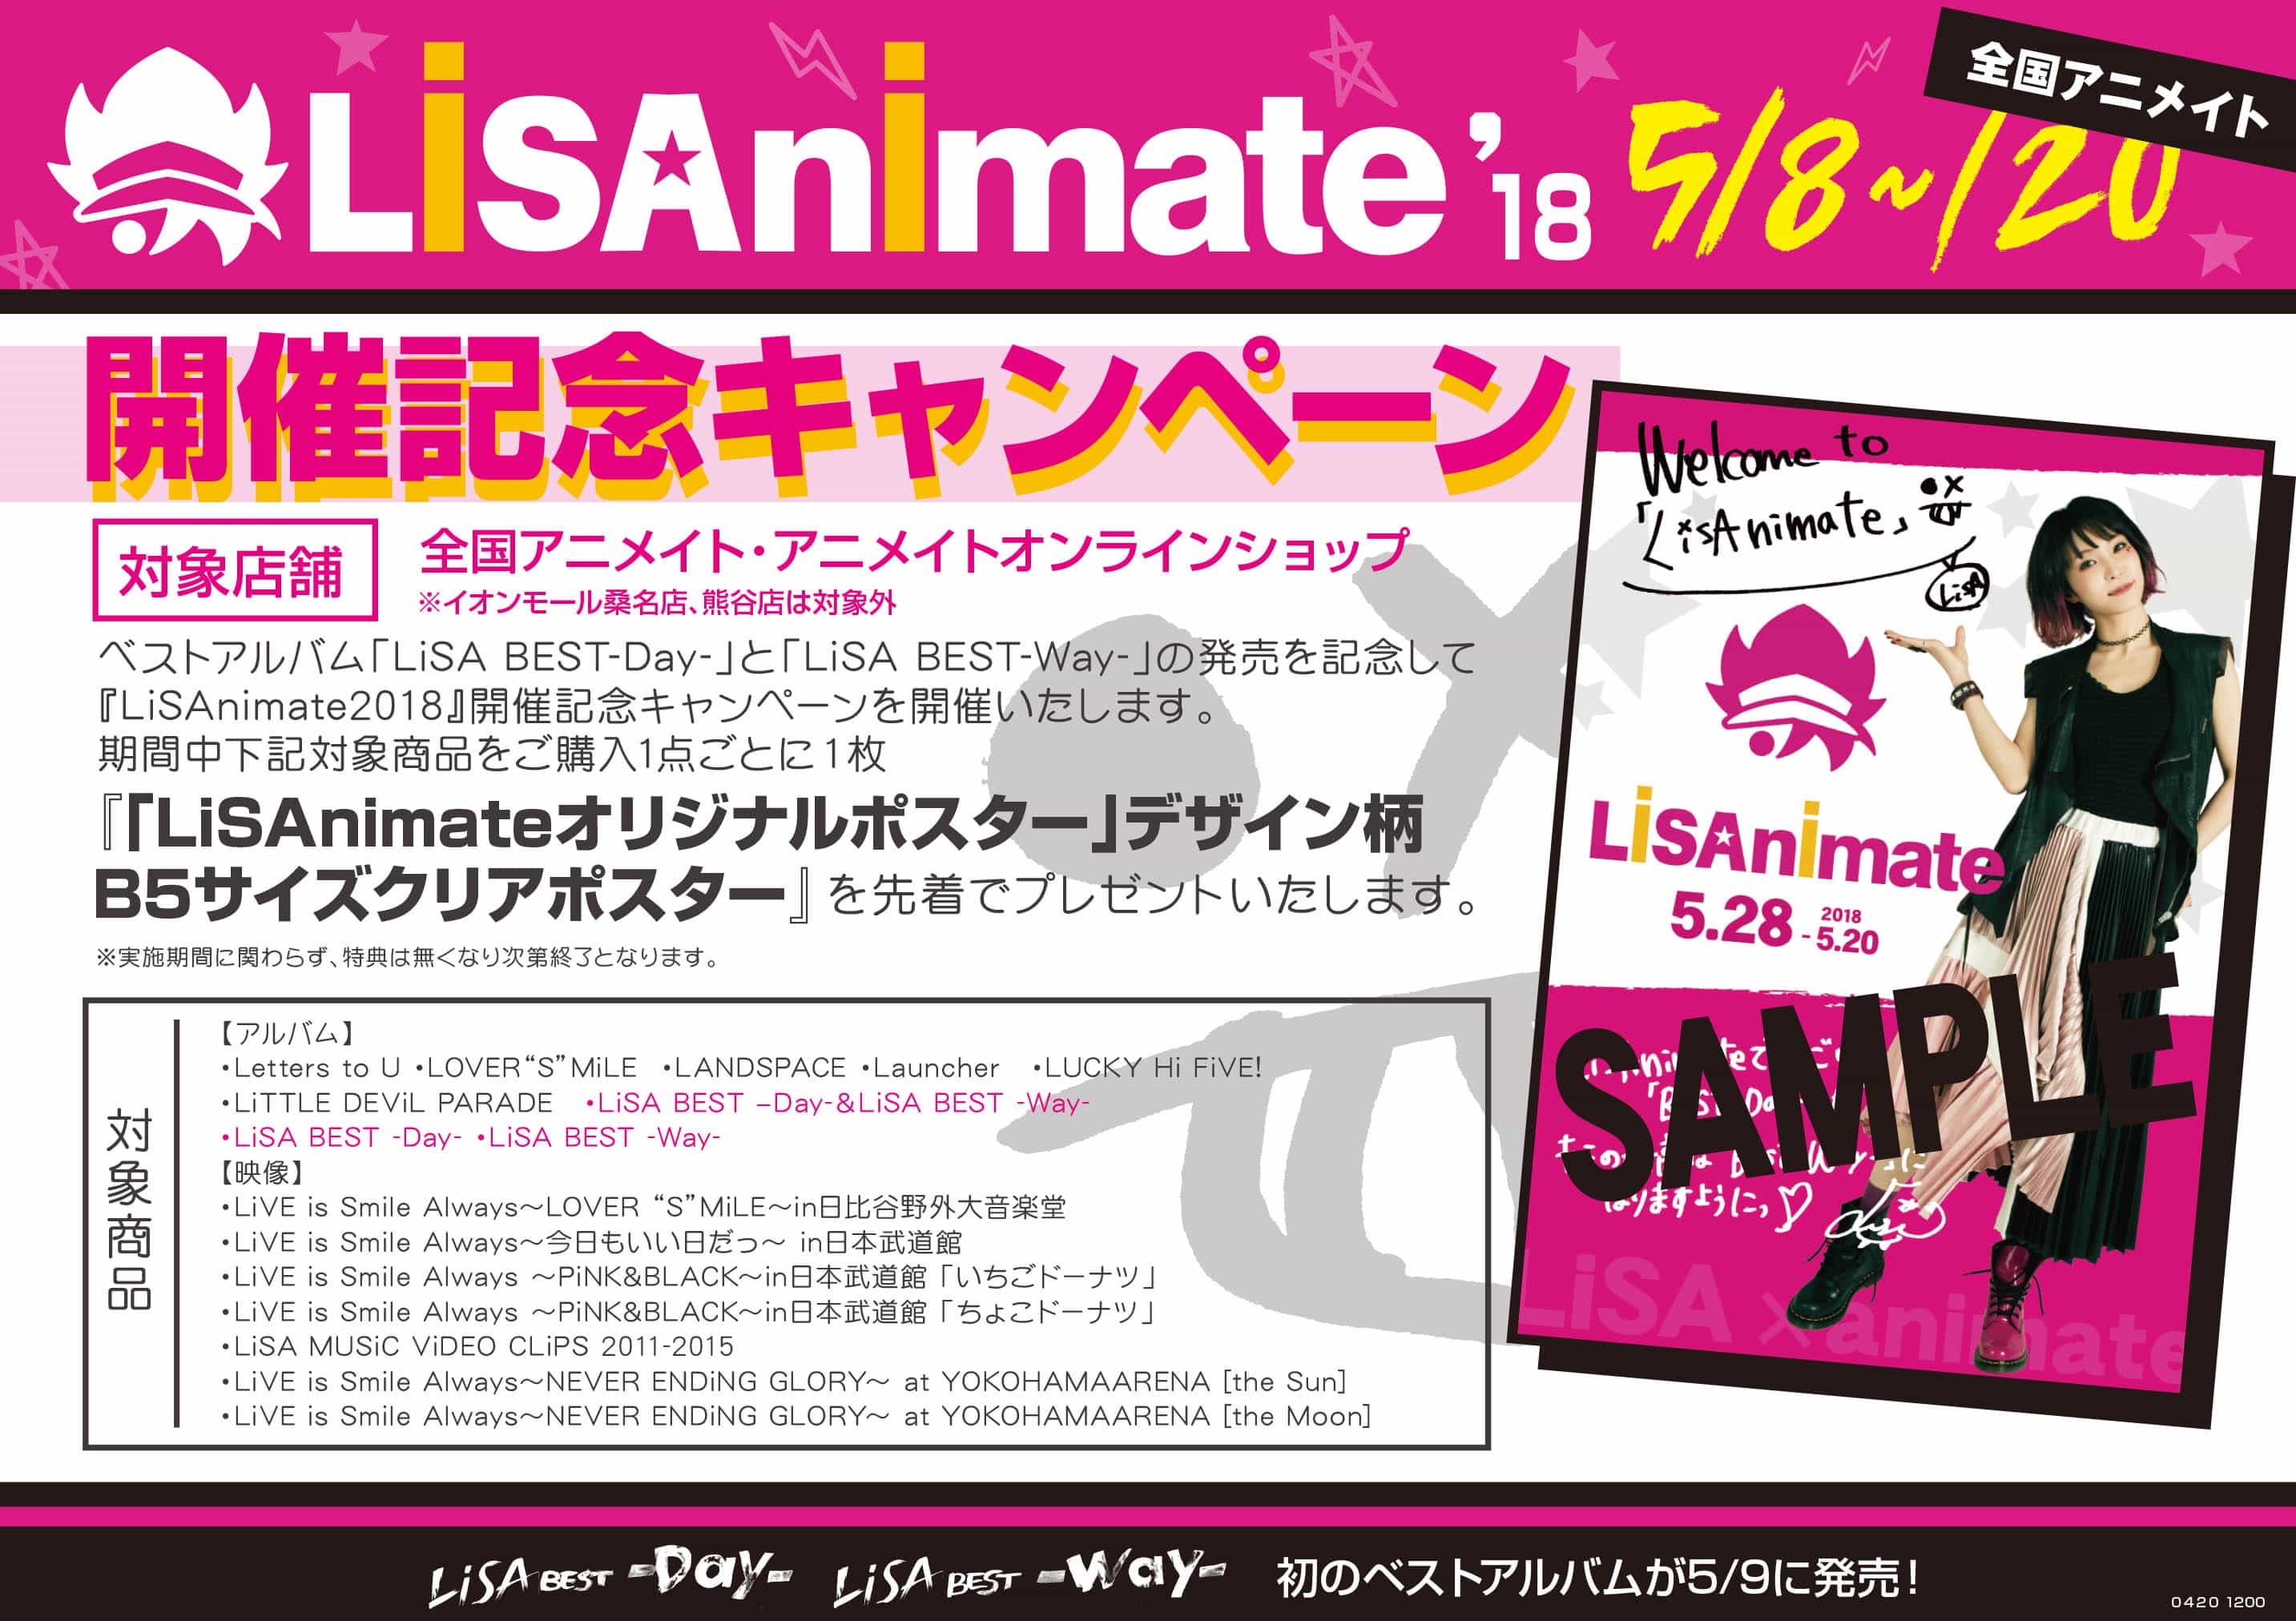 Lisanimate 18 開催記念キャンペーン アニメイト錦糸町